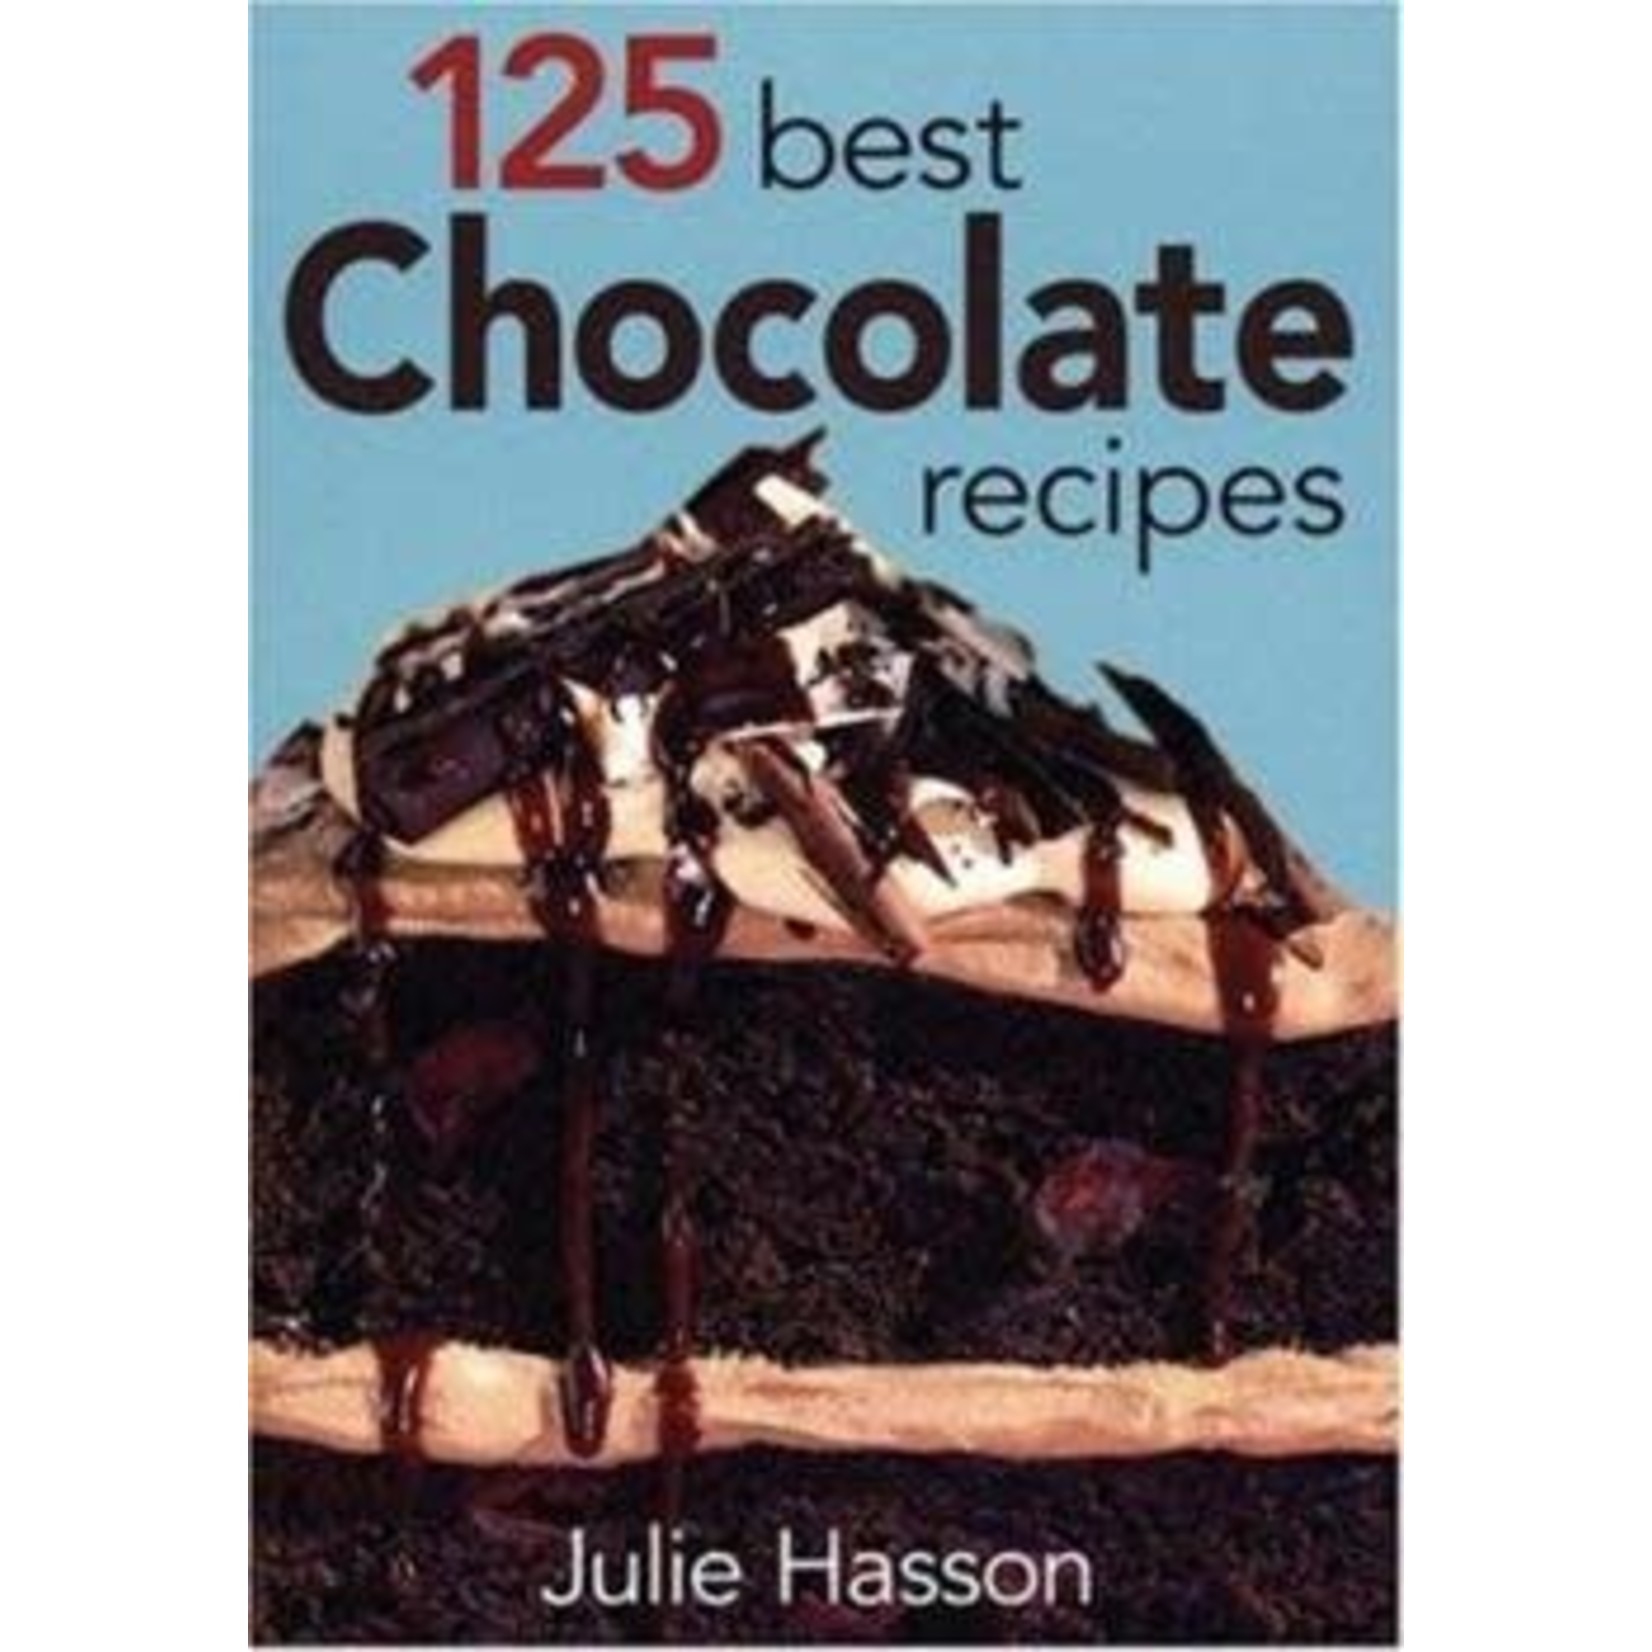 125 best Chocolate recipes